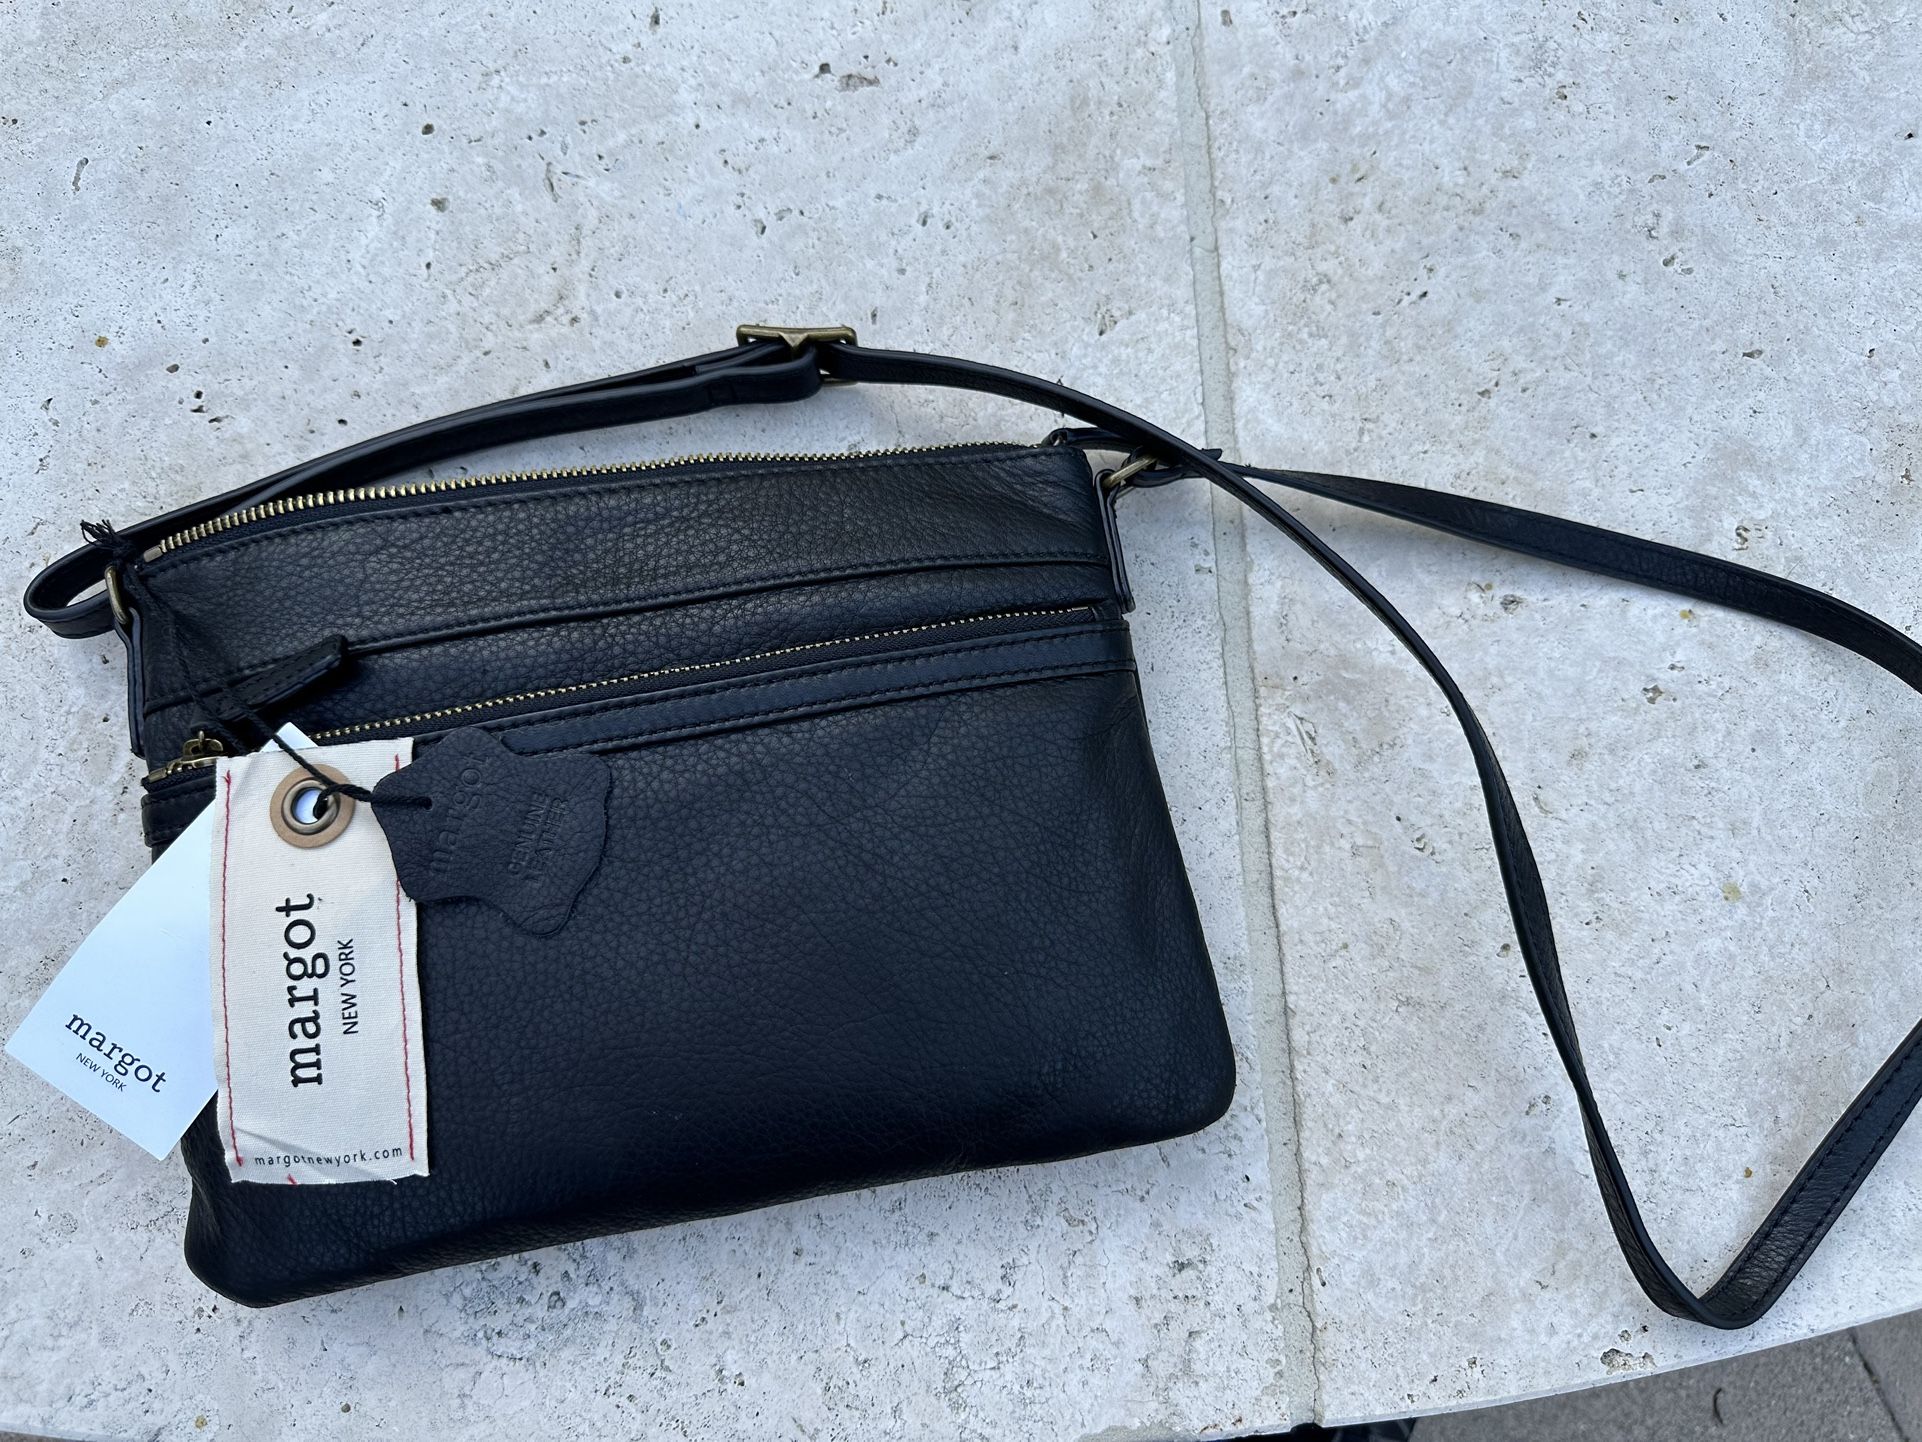 margot crossbody black leather purse. brand new!